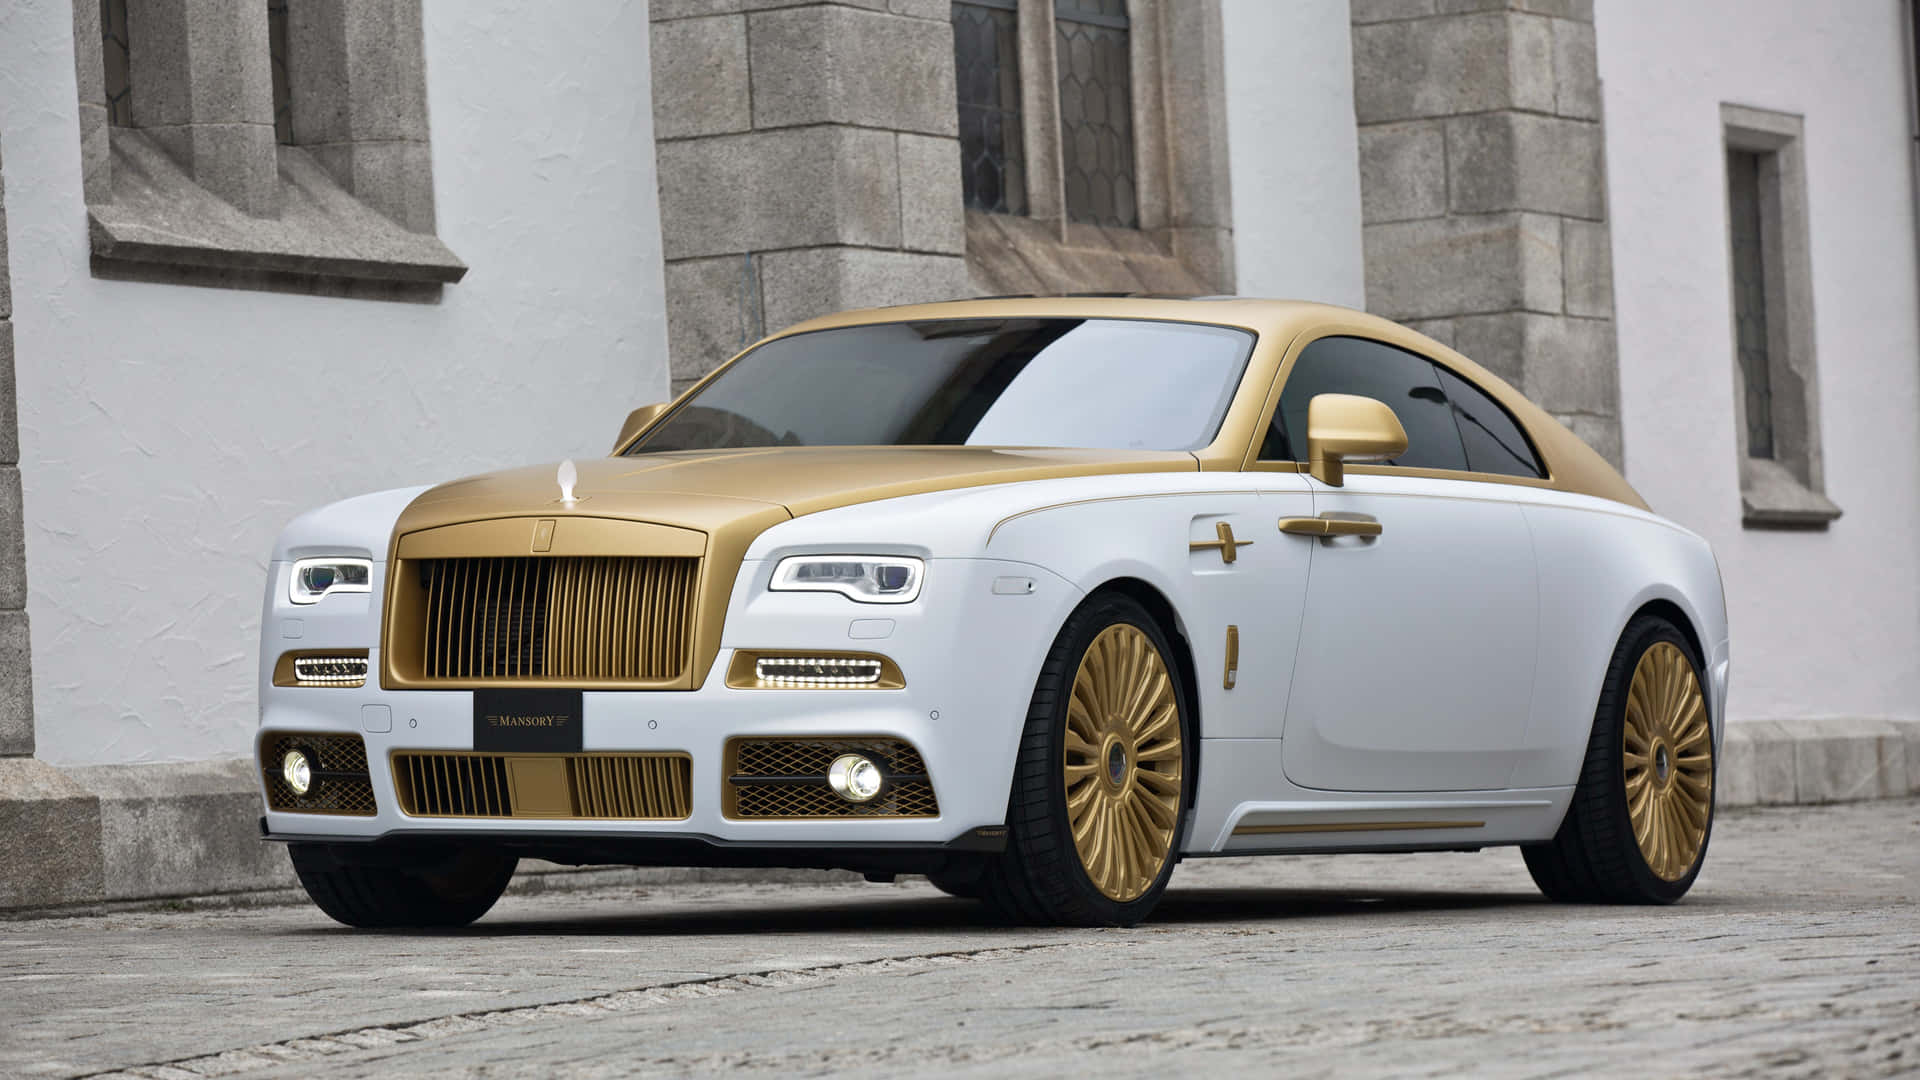 Caption: Luxurious Transformation - Rolls Royce Wraith Wallpaper